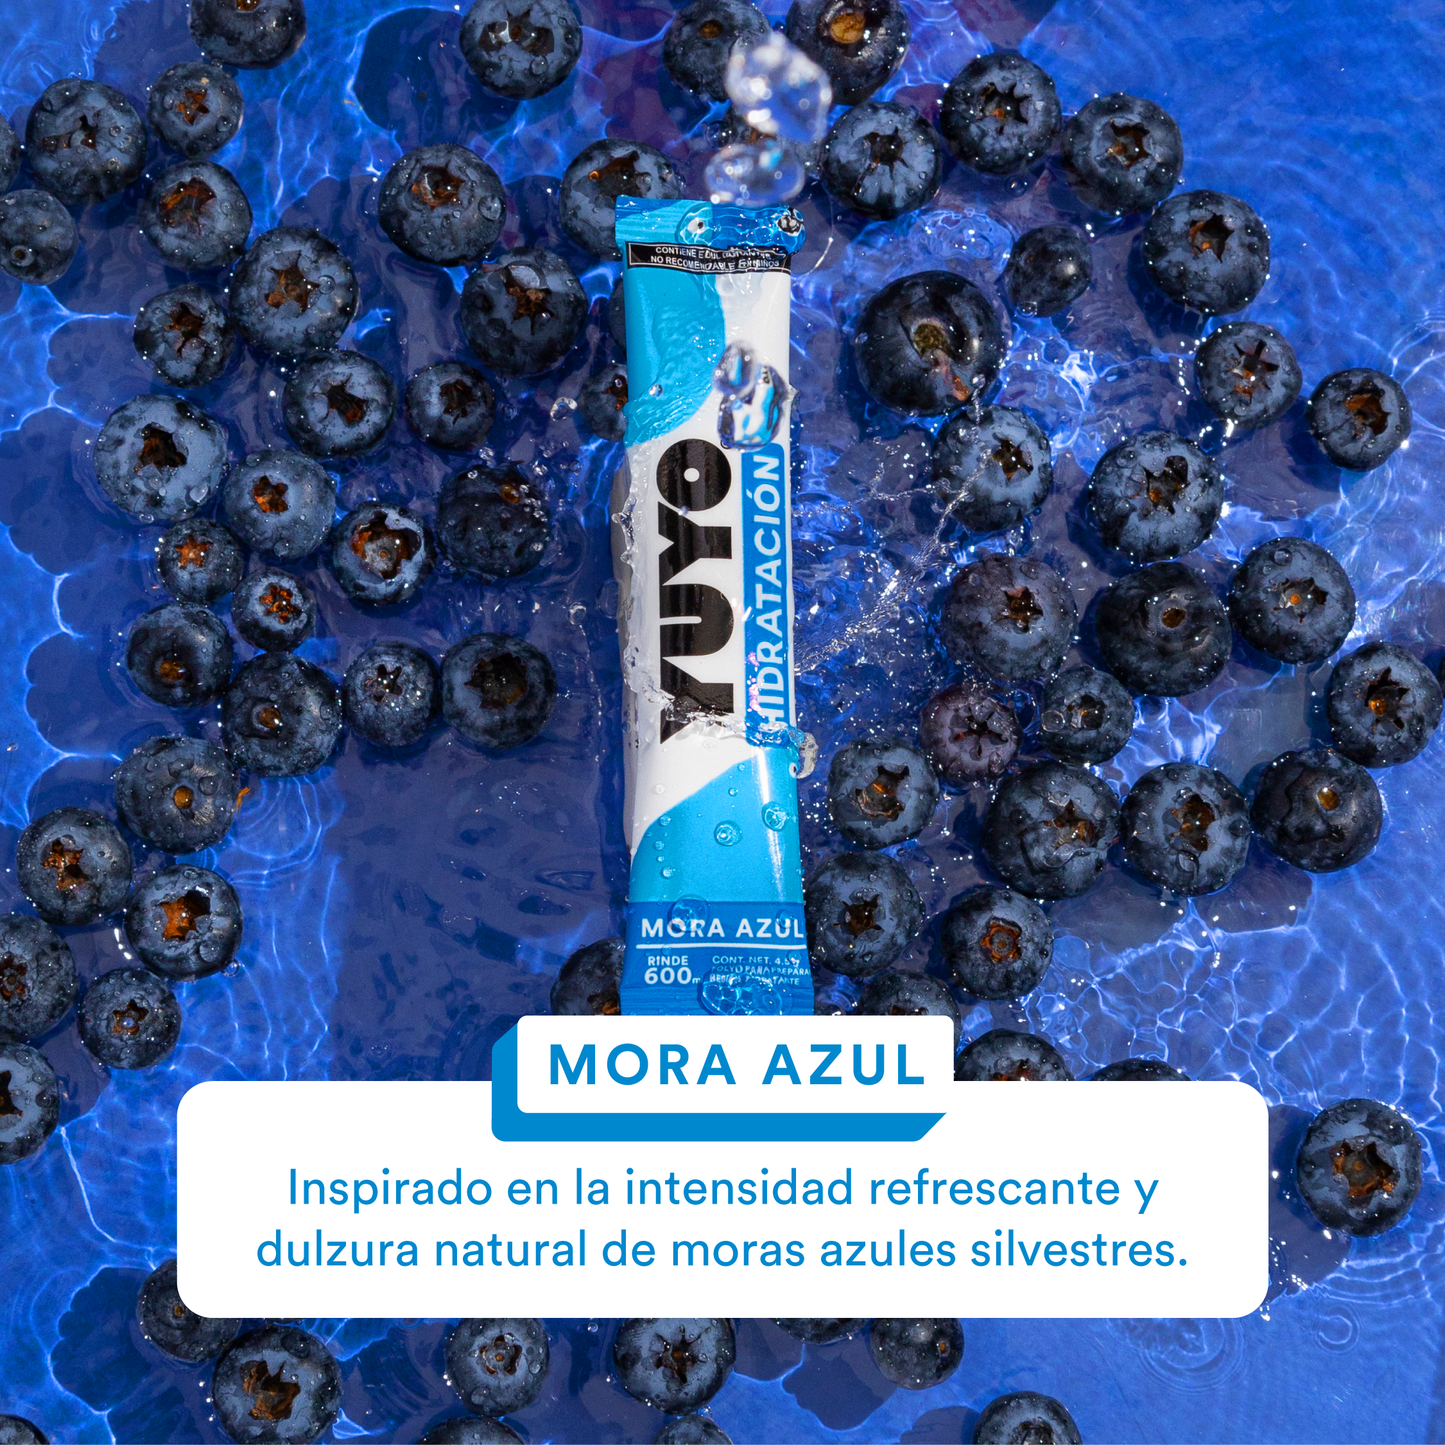 Hidratación Mora Azul (2 Pack)